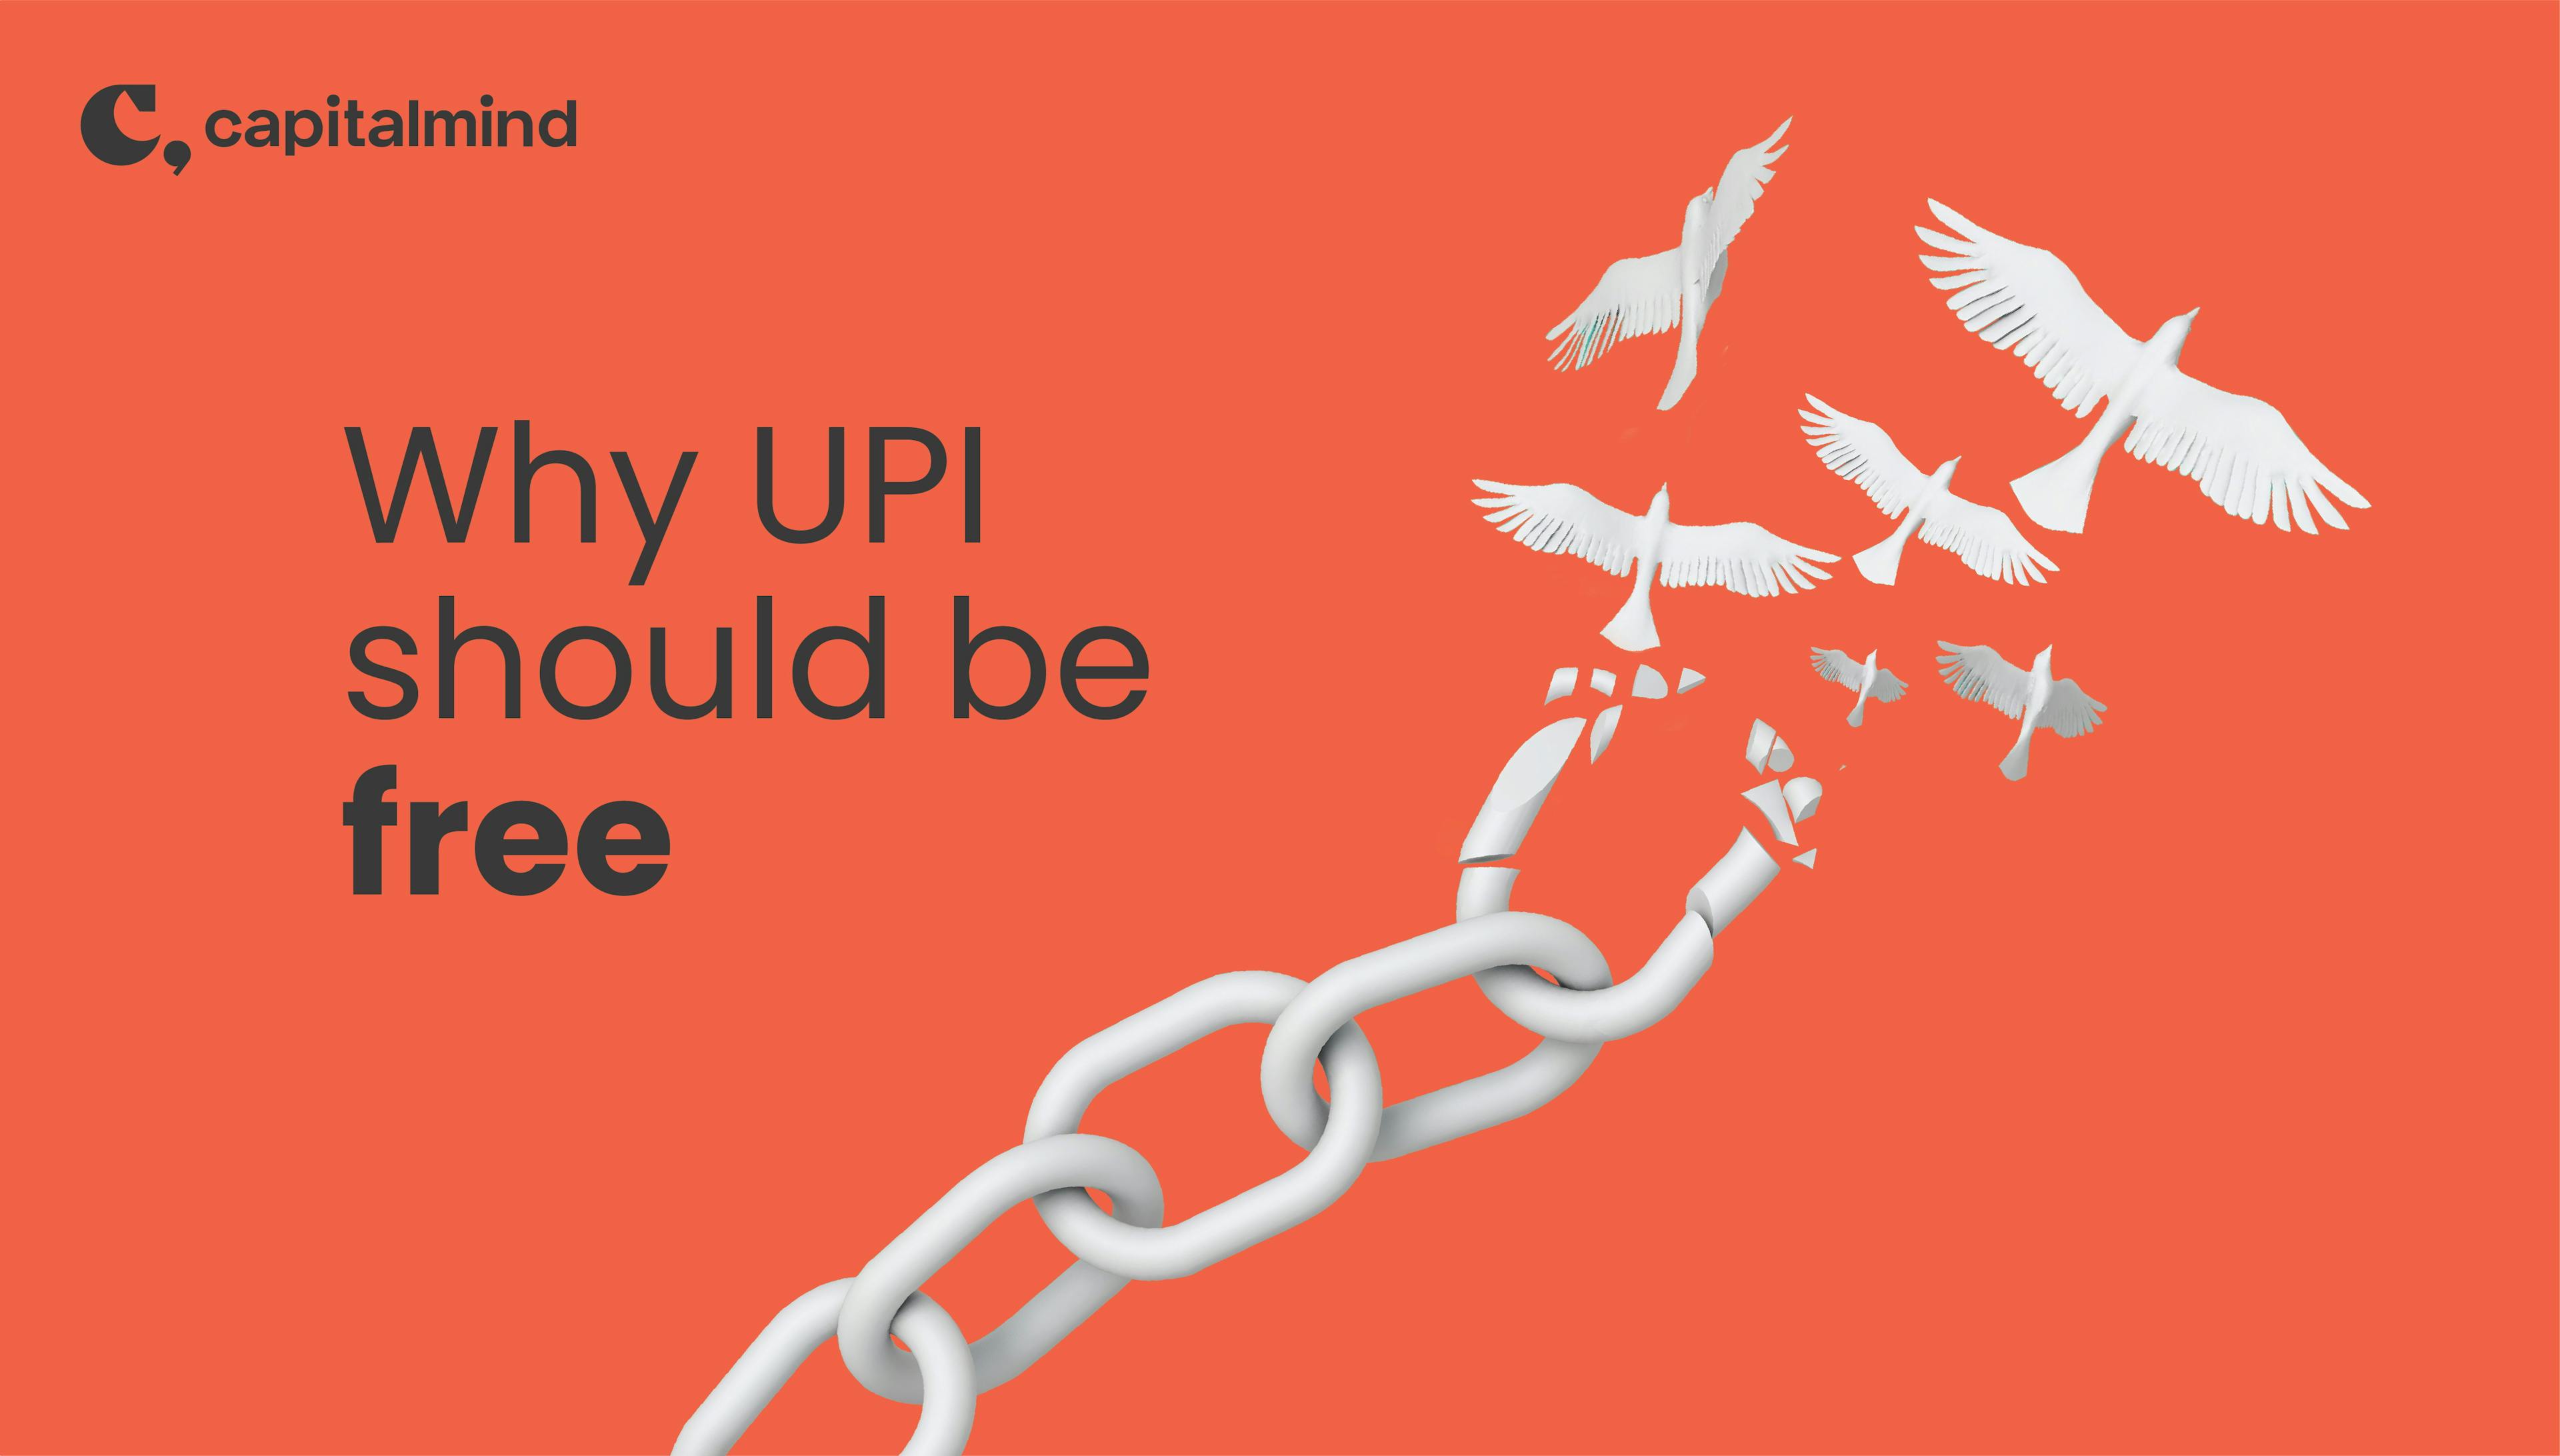 UPI should be free